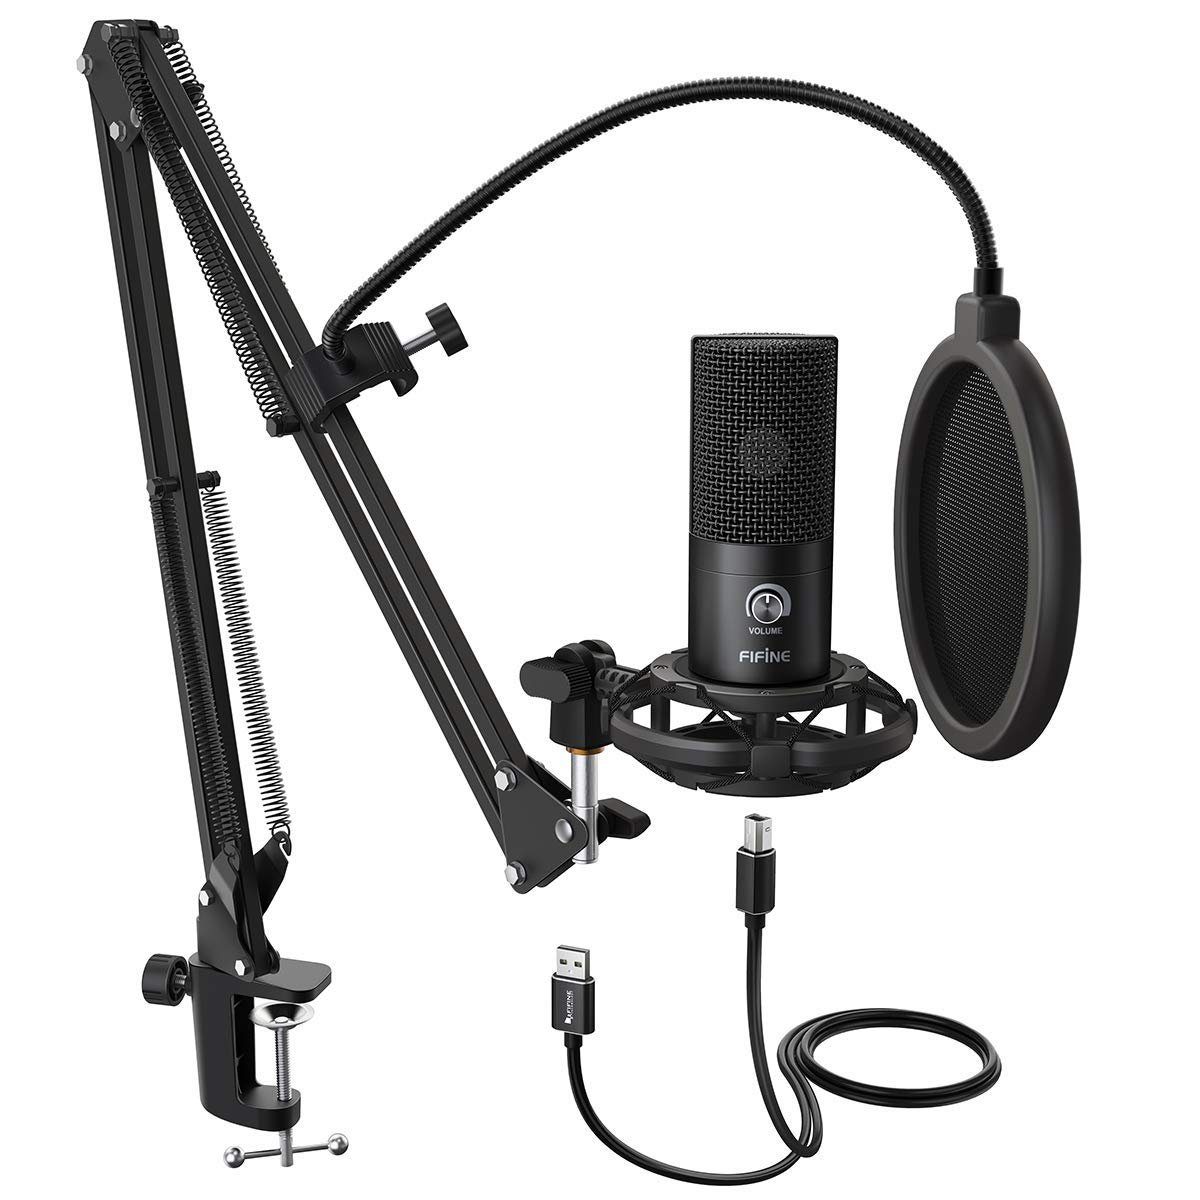 Kondensator Microphone USB Mikrofon Kit Komplett Set für Podcast Studio Aufnahme 